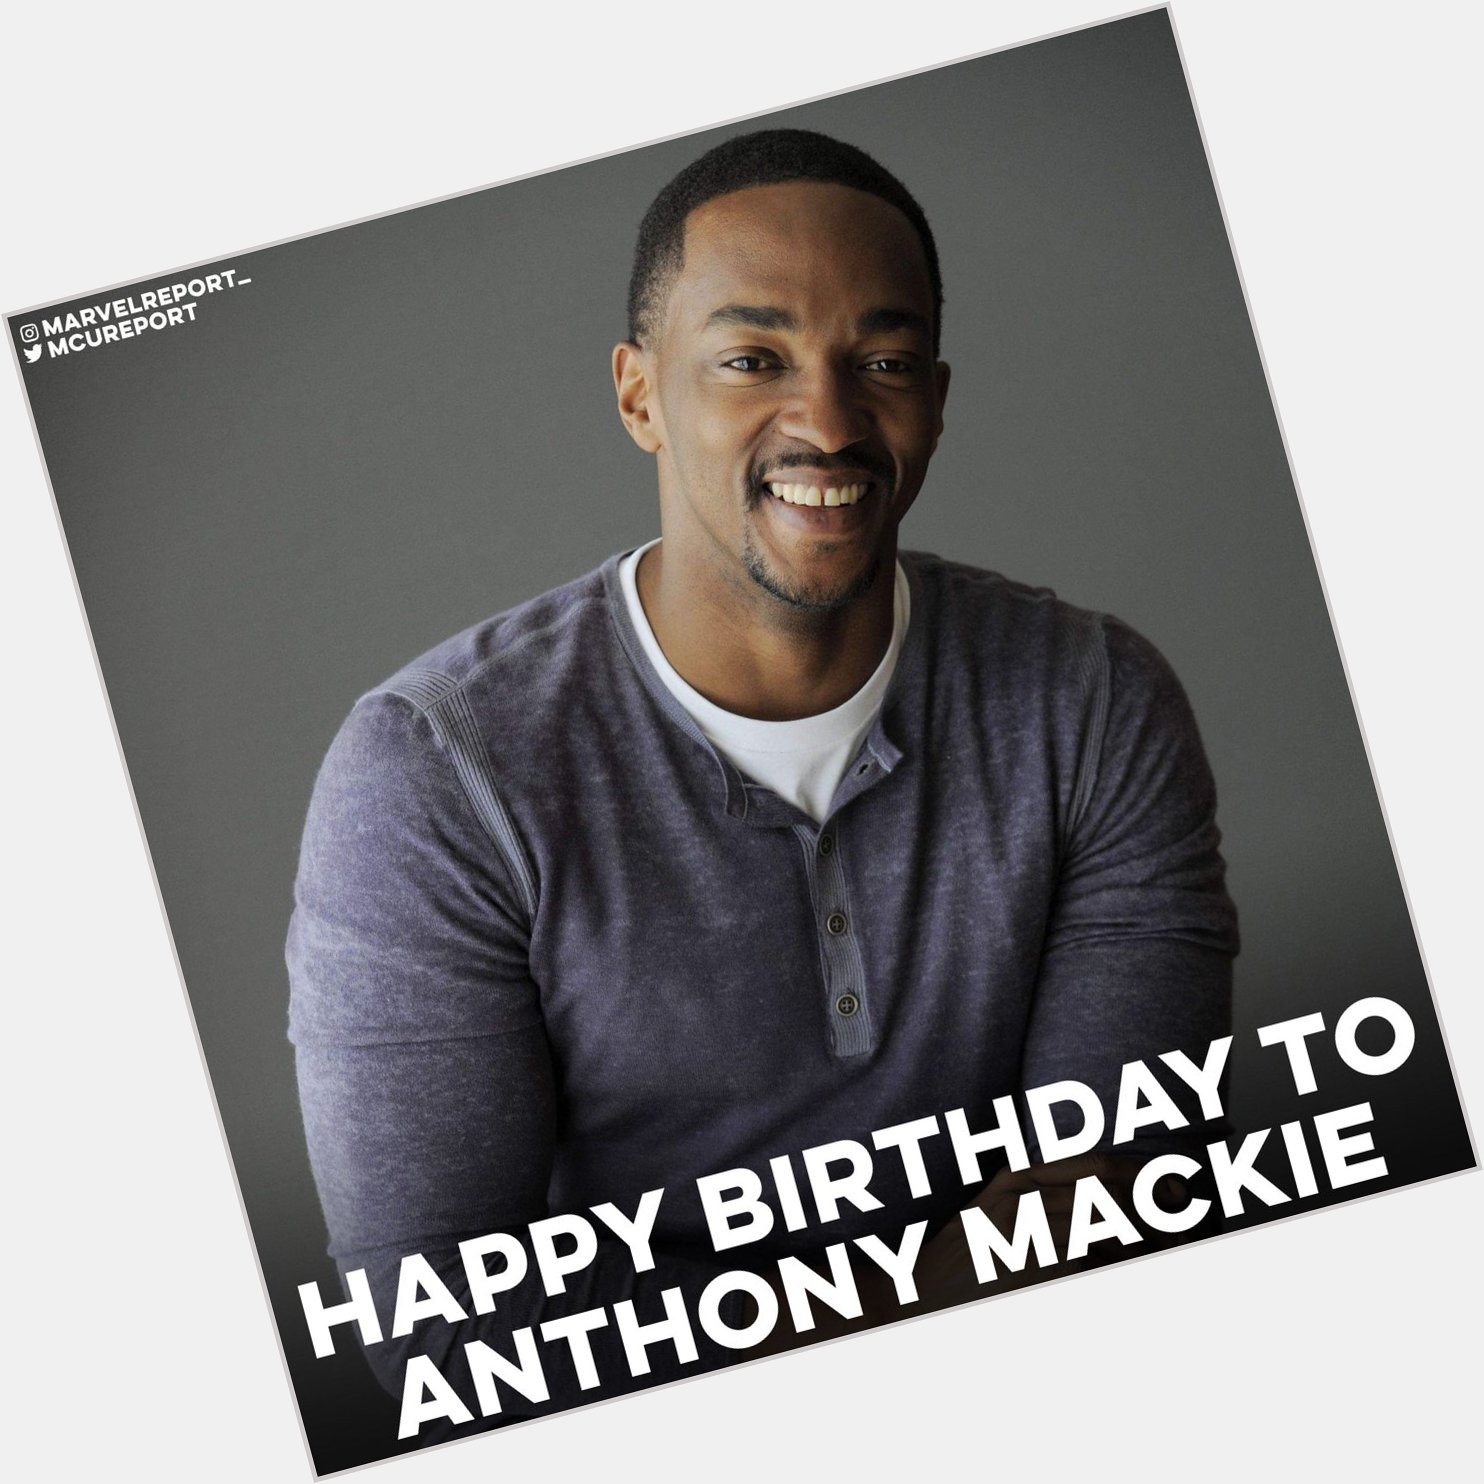 Happy Birthday to Anthony Mackie who turns 43 today 